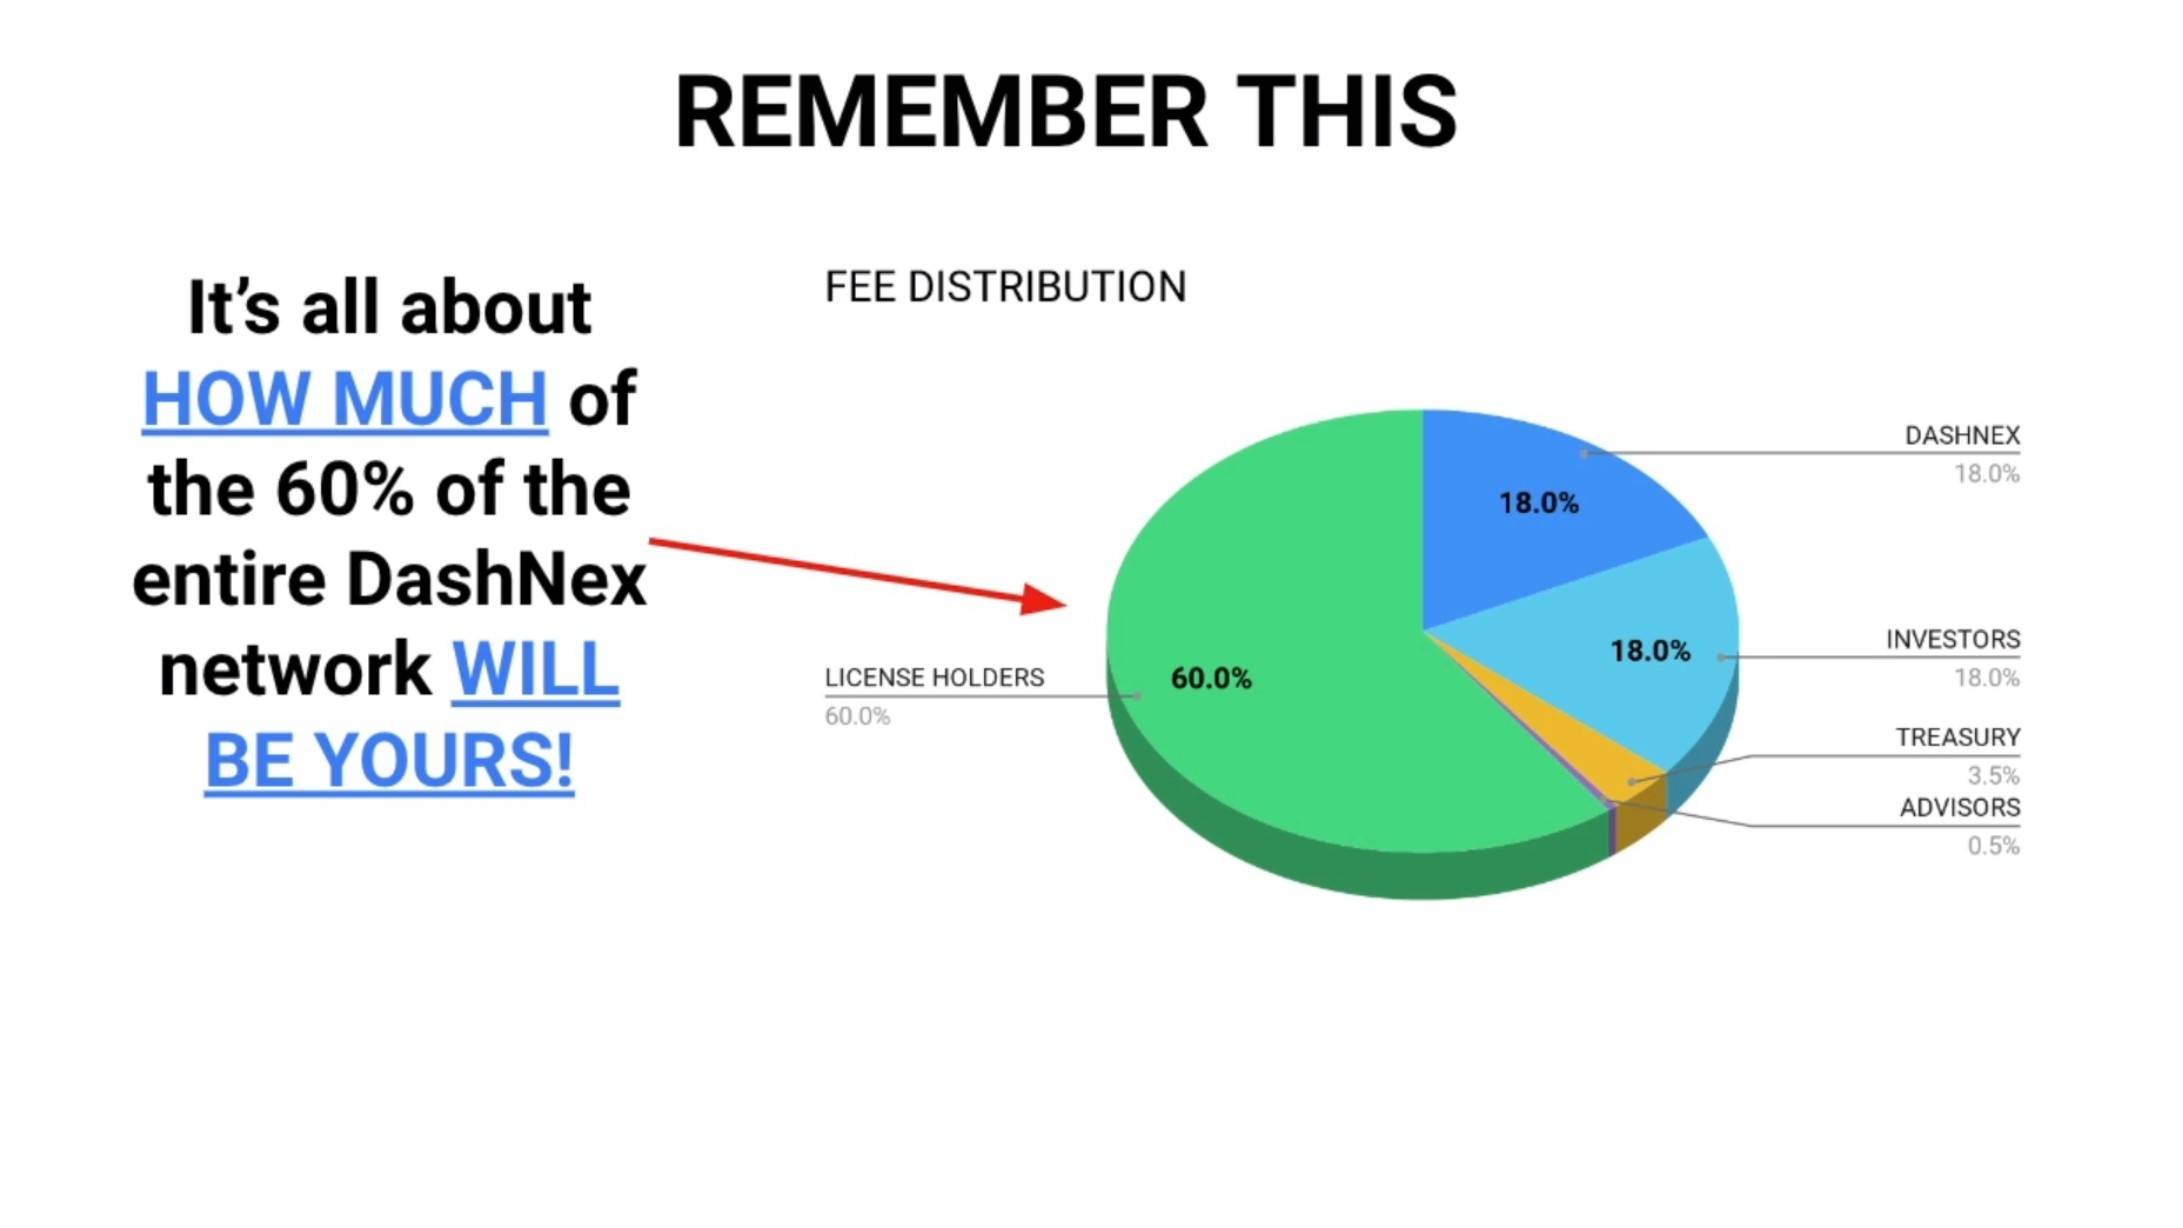 Fee Distribution Pie Chart